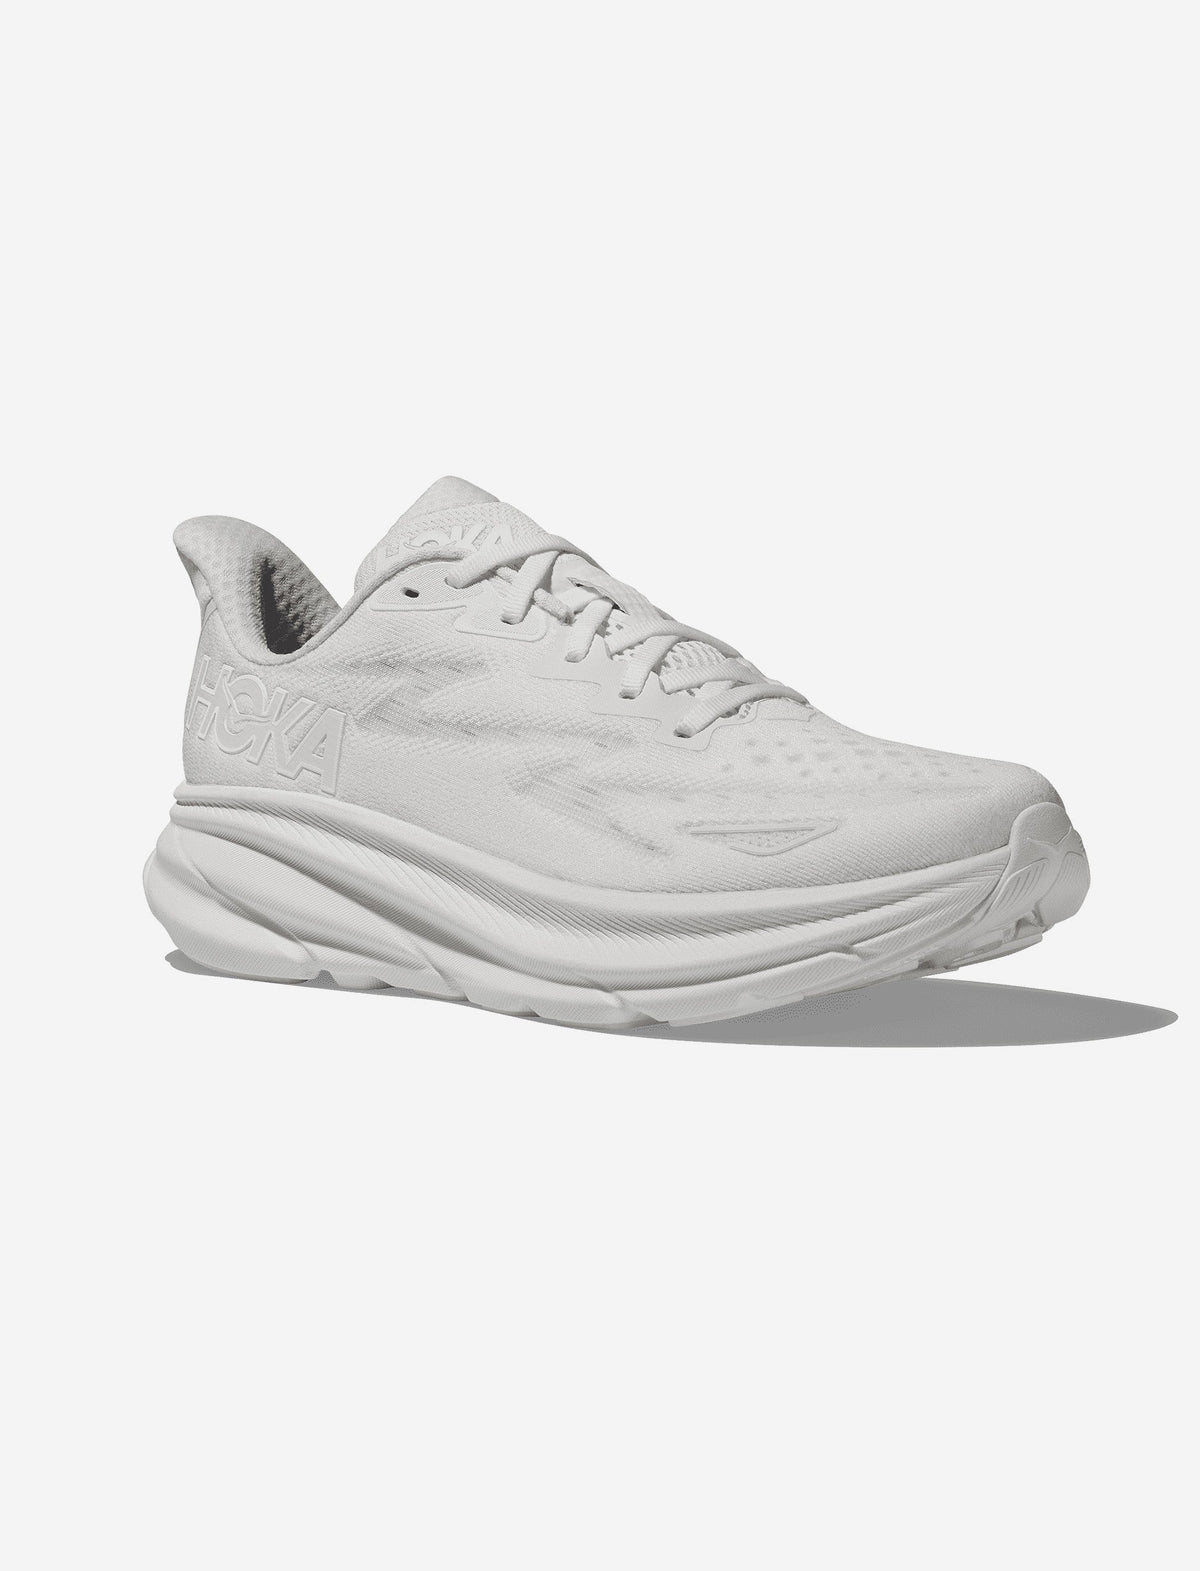 Hoka Clifton 9 - נעלי ספורט גברים הוקה קליפטון 9 בצבע לבן/לבן-Hoka-41-נאקו